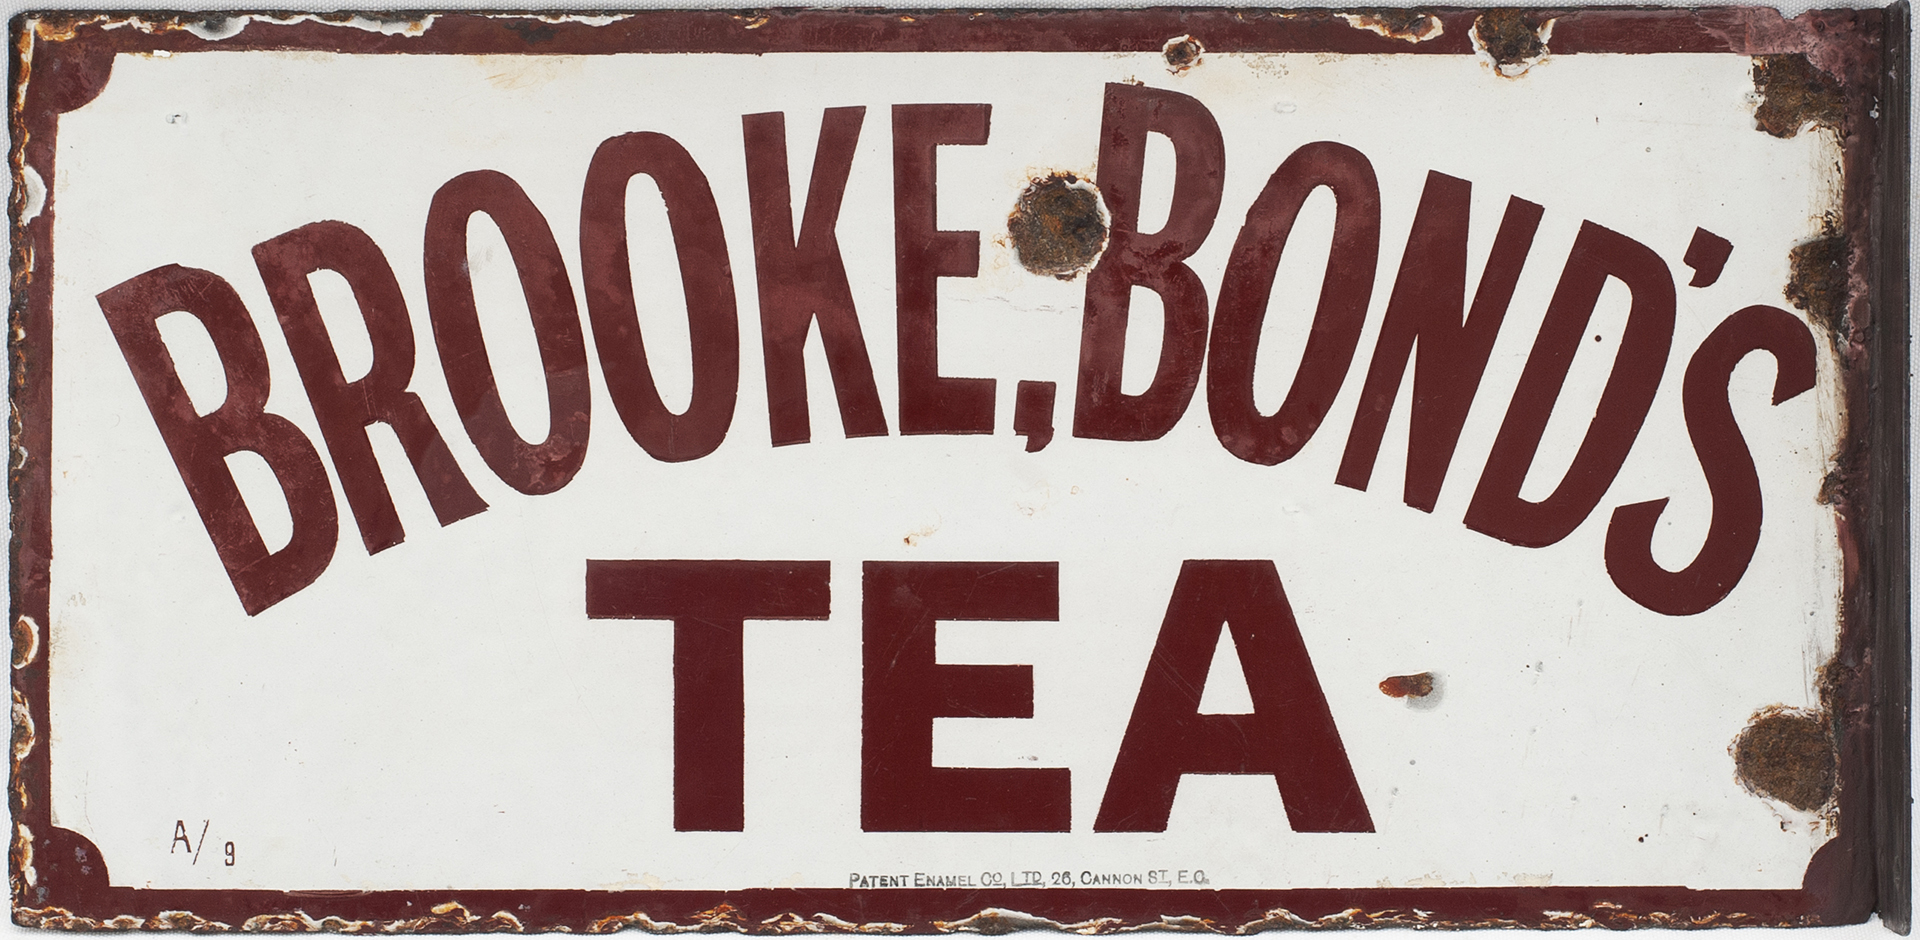 Brooke Bond's Tea - Image 2 of 2